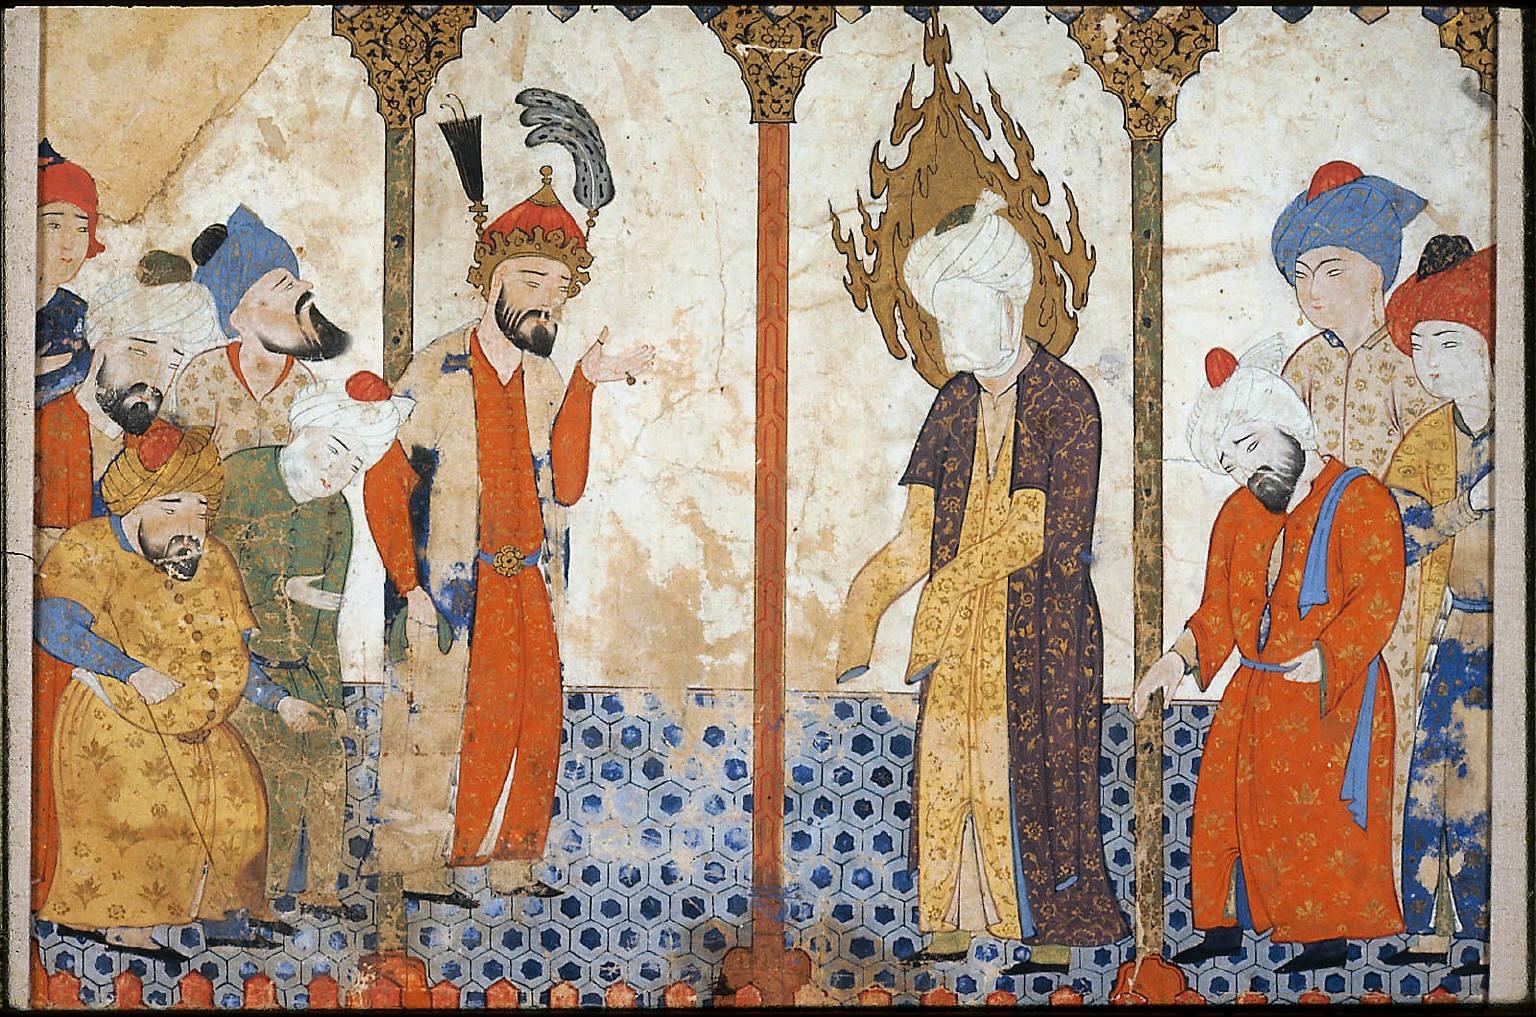 http://4.bp.blogspot.com/-Gs8oQUEcxLo/UeWuvN7e44I/AAAAAAAAJ-c/X6jcH73TnWA/s1600/artist-not-recorded-the-prophet-muhammad-in-a-mosque-16th-century-painting-artwork-print.jpg